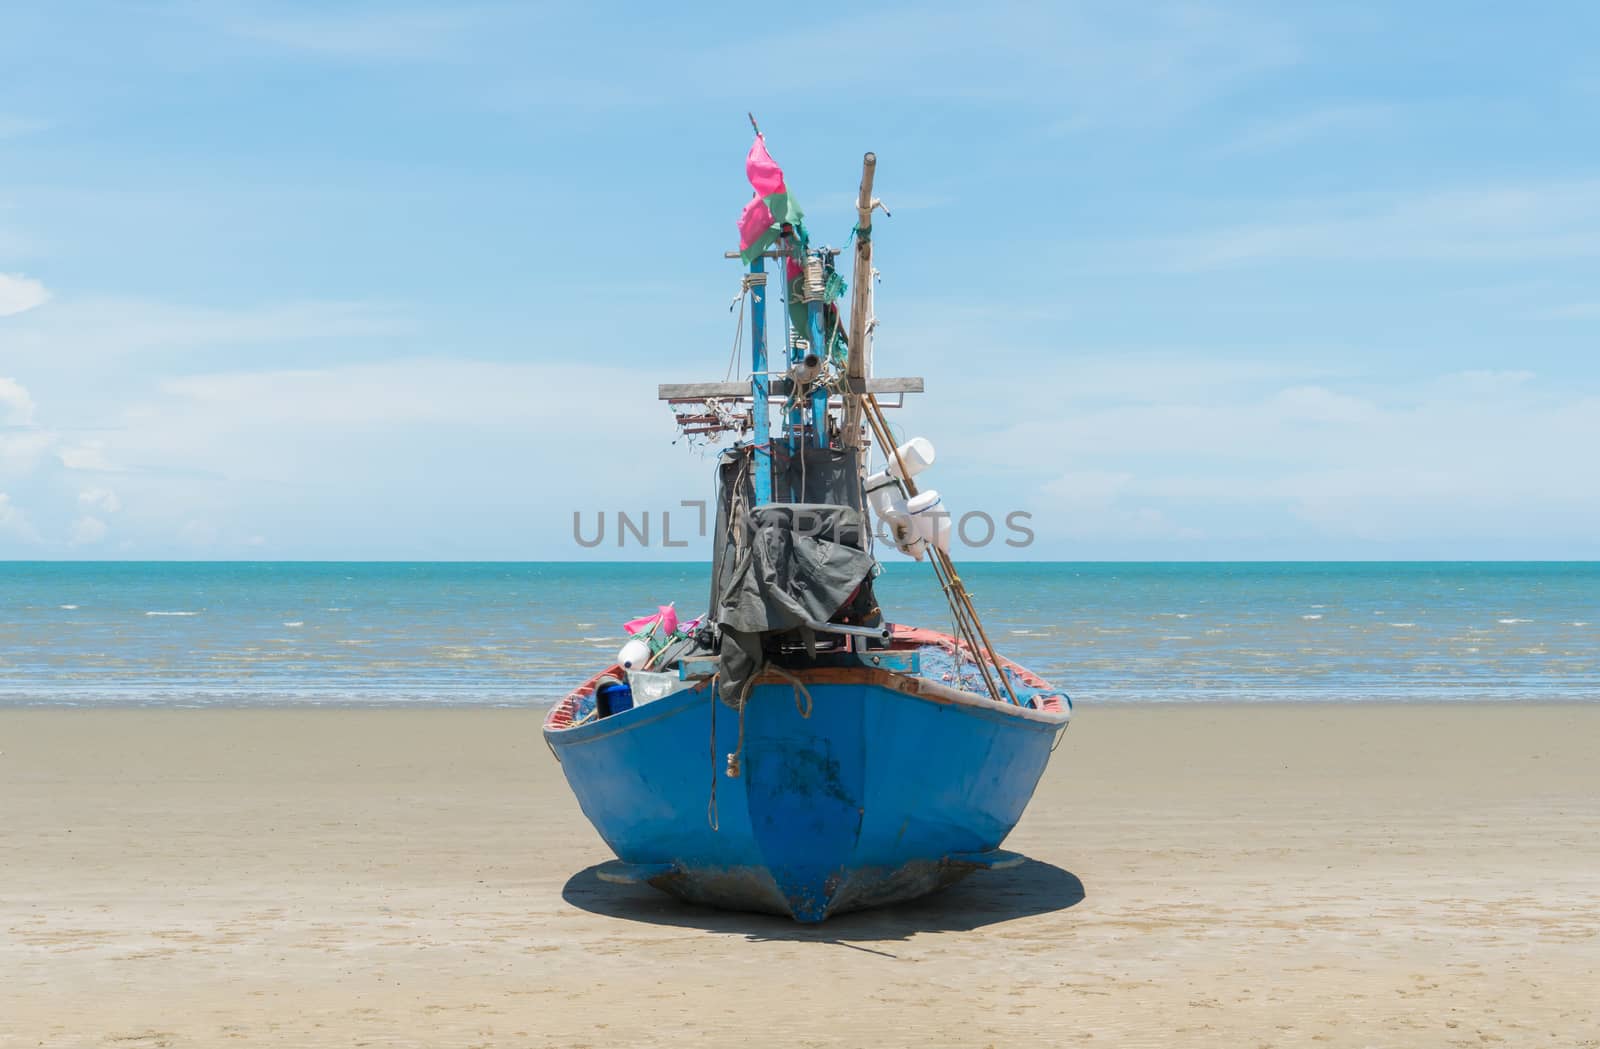 Blue Fishing Boat on Sam Roi Yod Beach Prachuap Khiri Khan Thail by steafpong